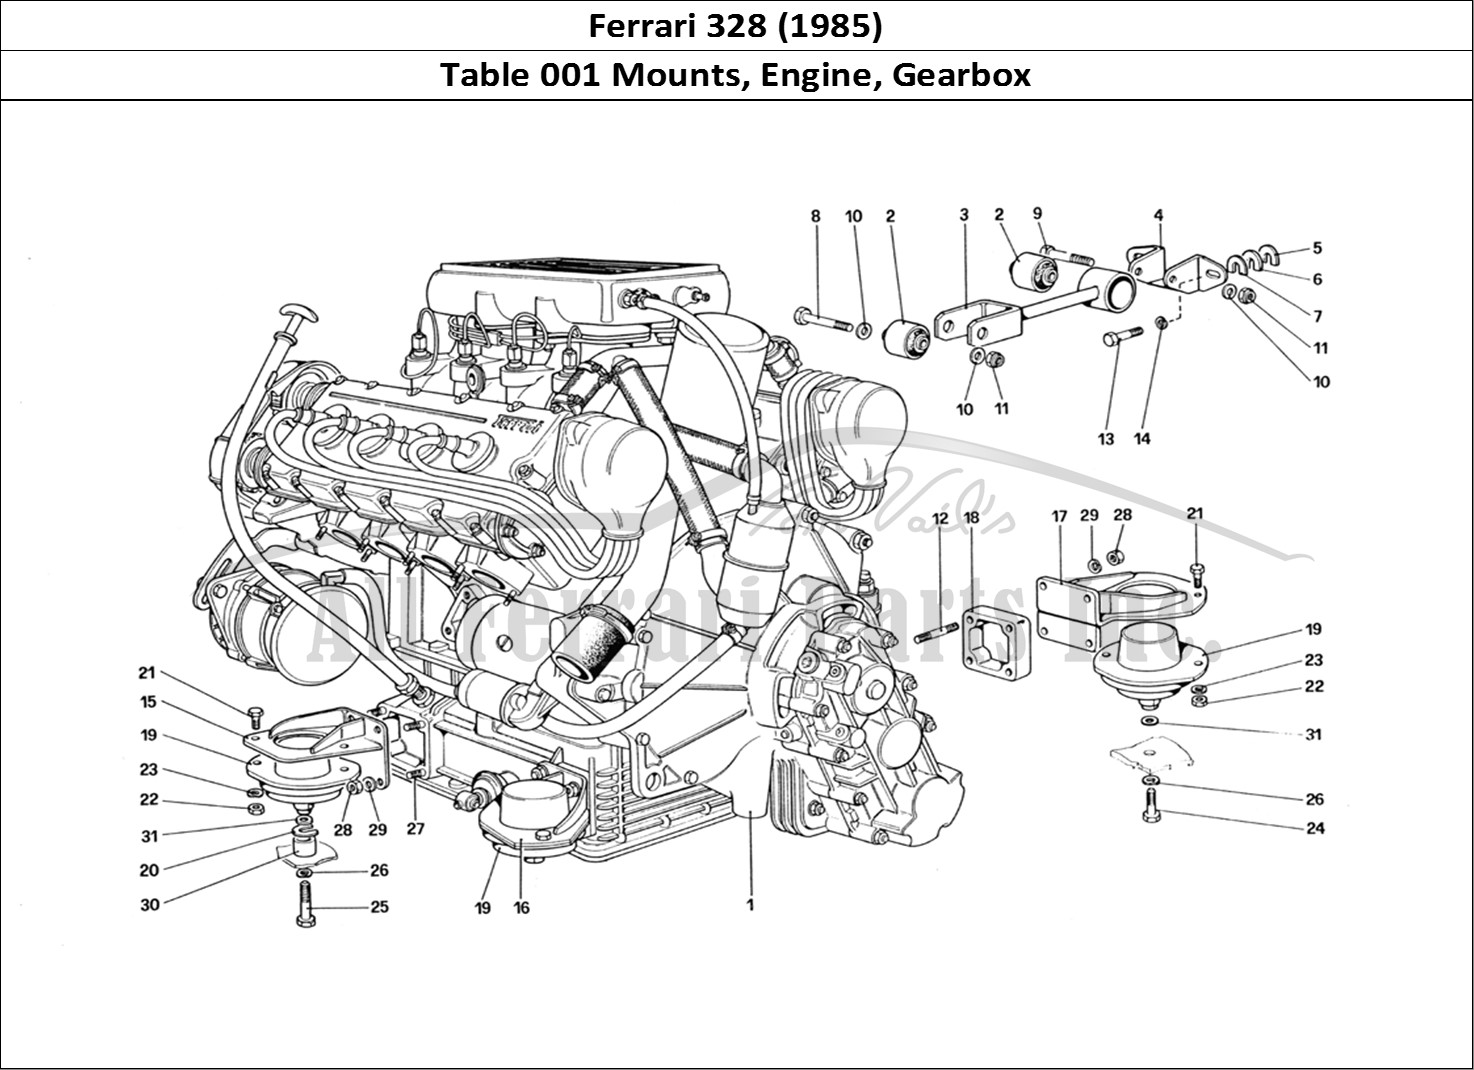 Ferrari Parts Ferrari 328 (1985) Page 001 Engine - Gearbox and Supp